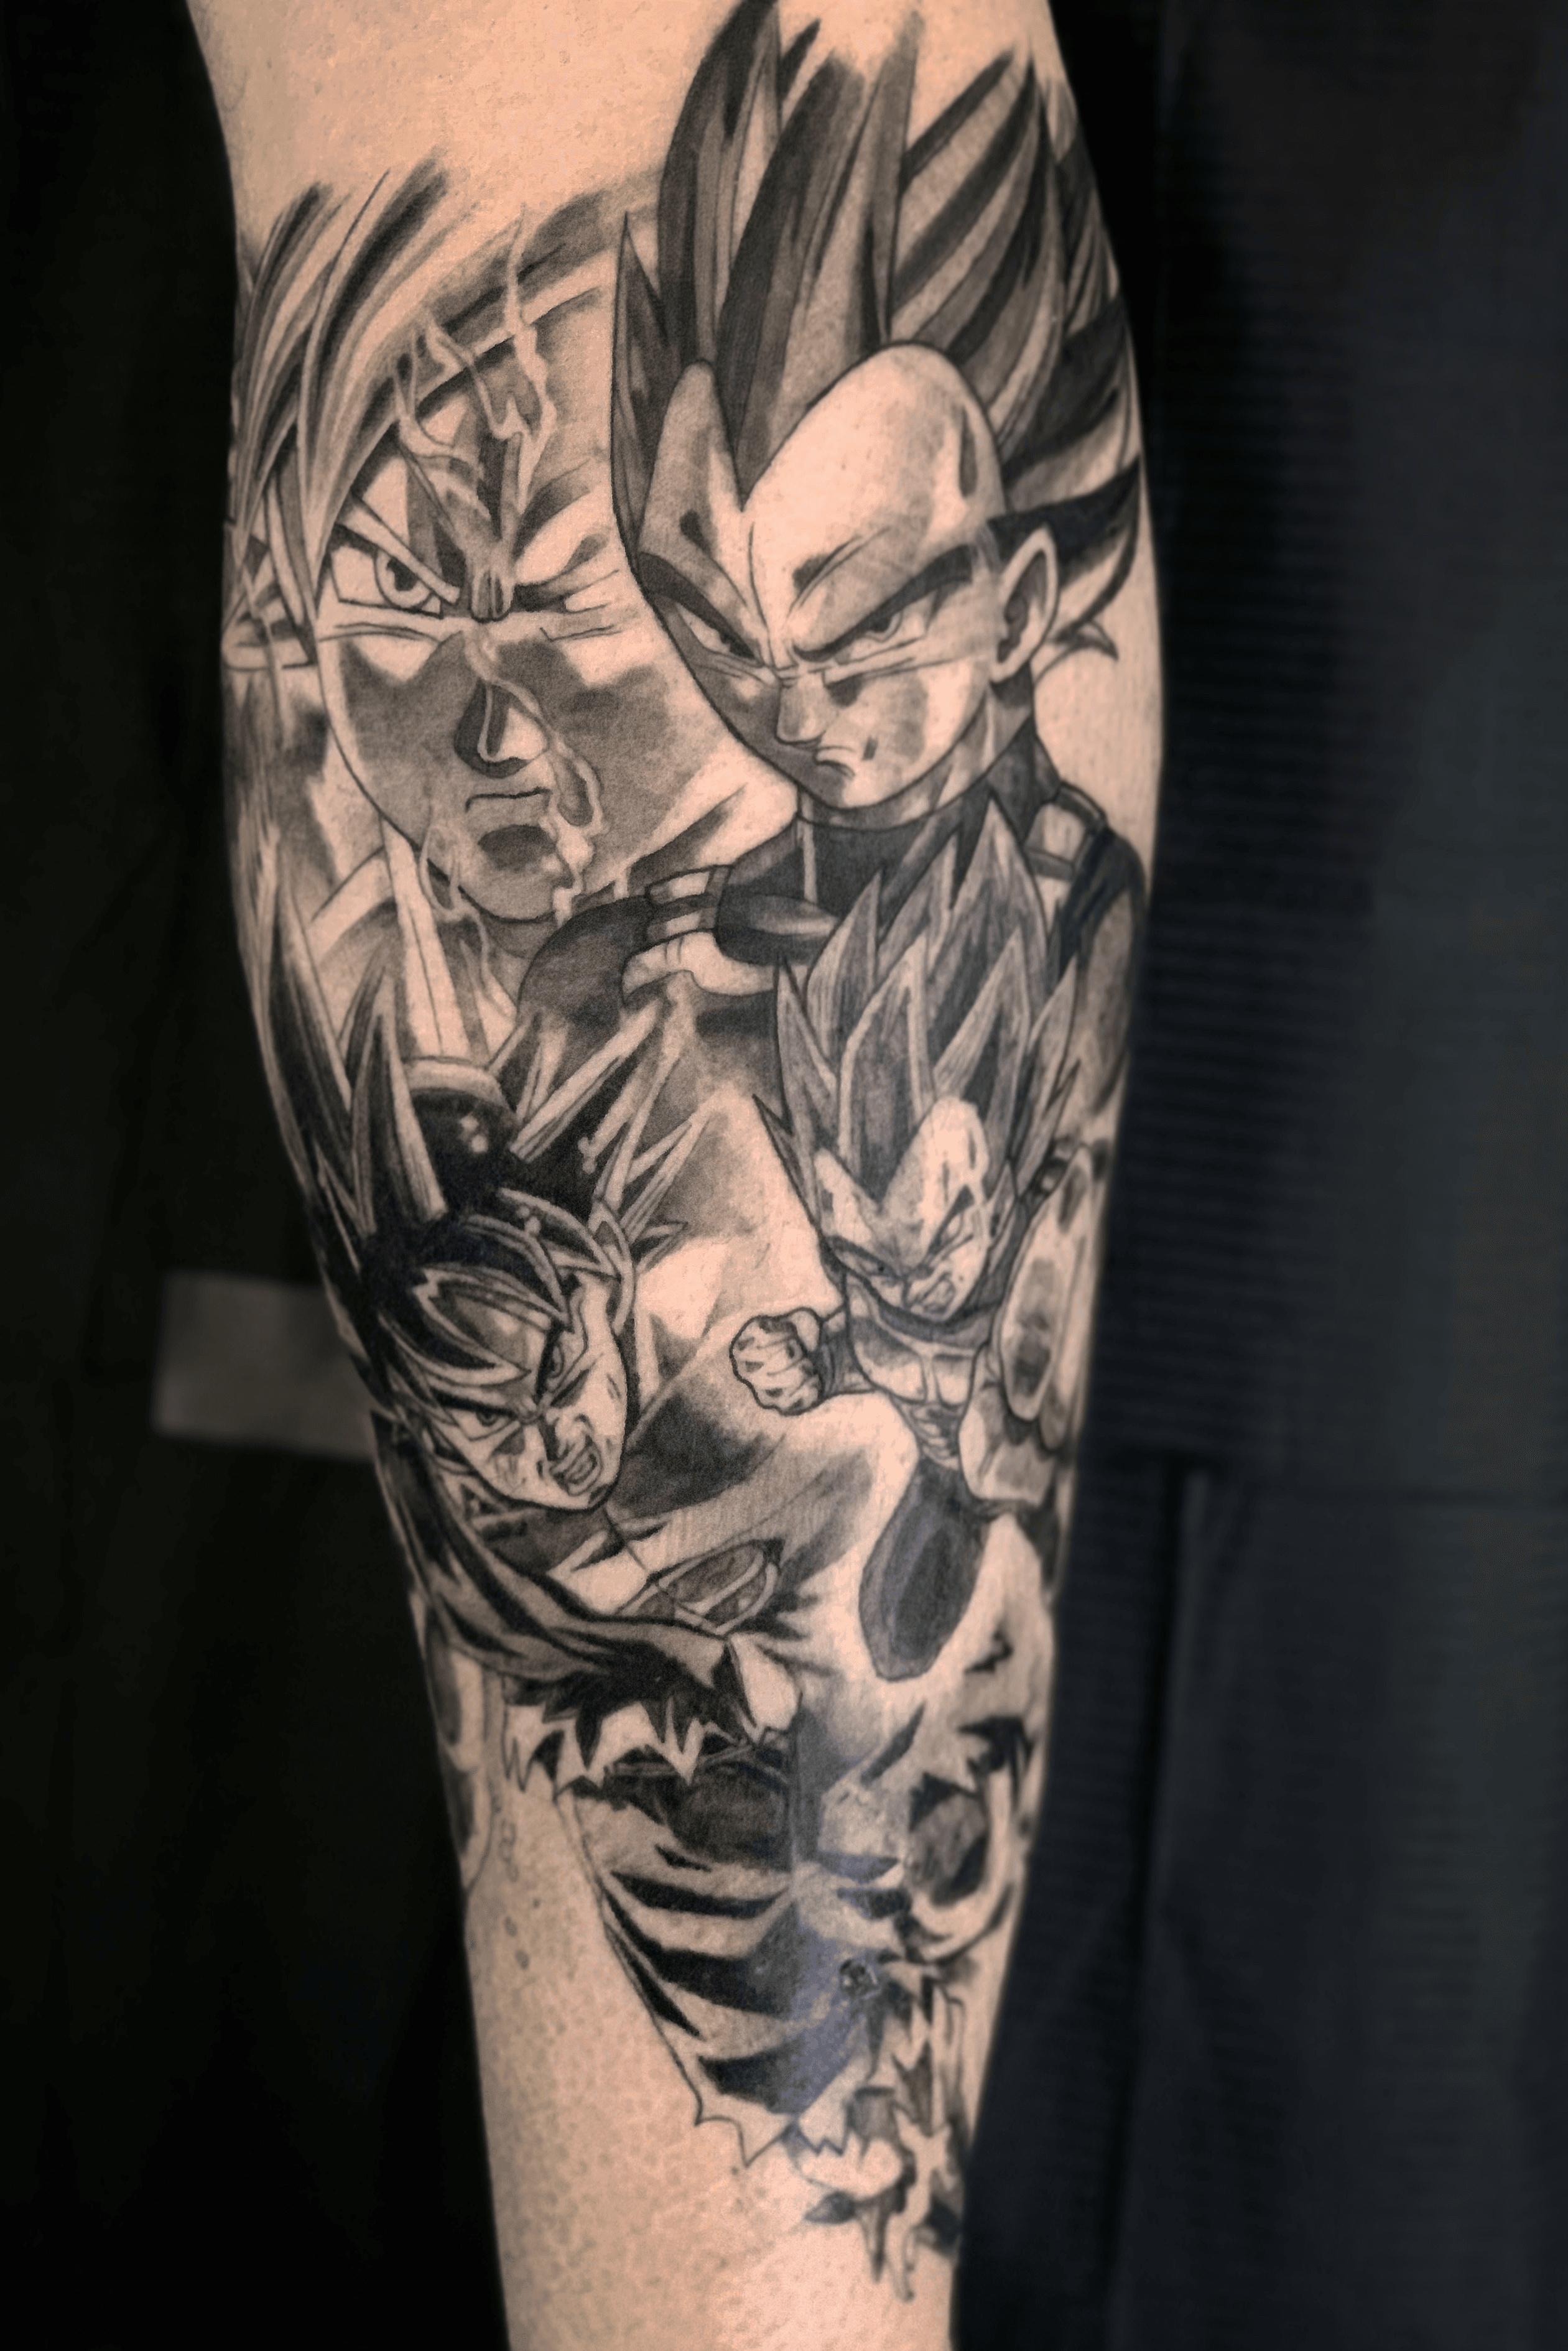 The Very Best Dragon Ball Z Tattoos  Z tattoo Dragon ball tattoo Tattoos